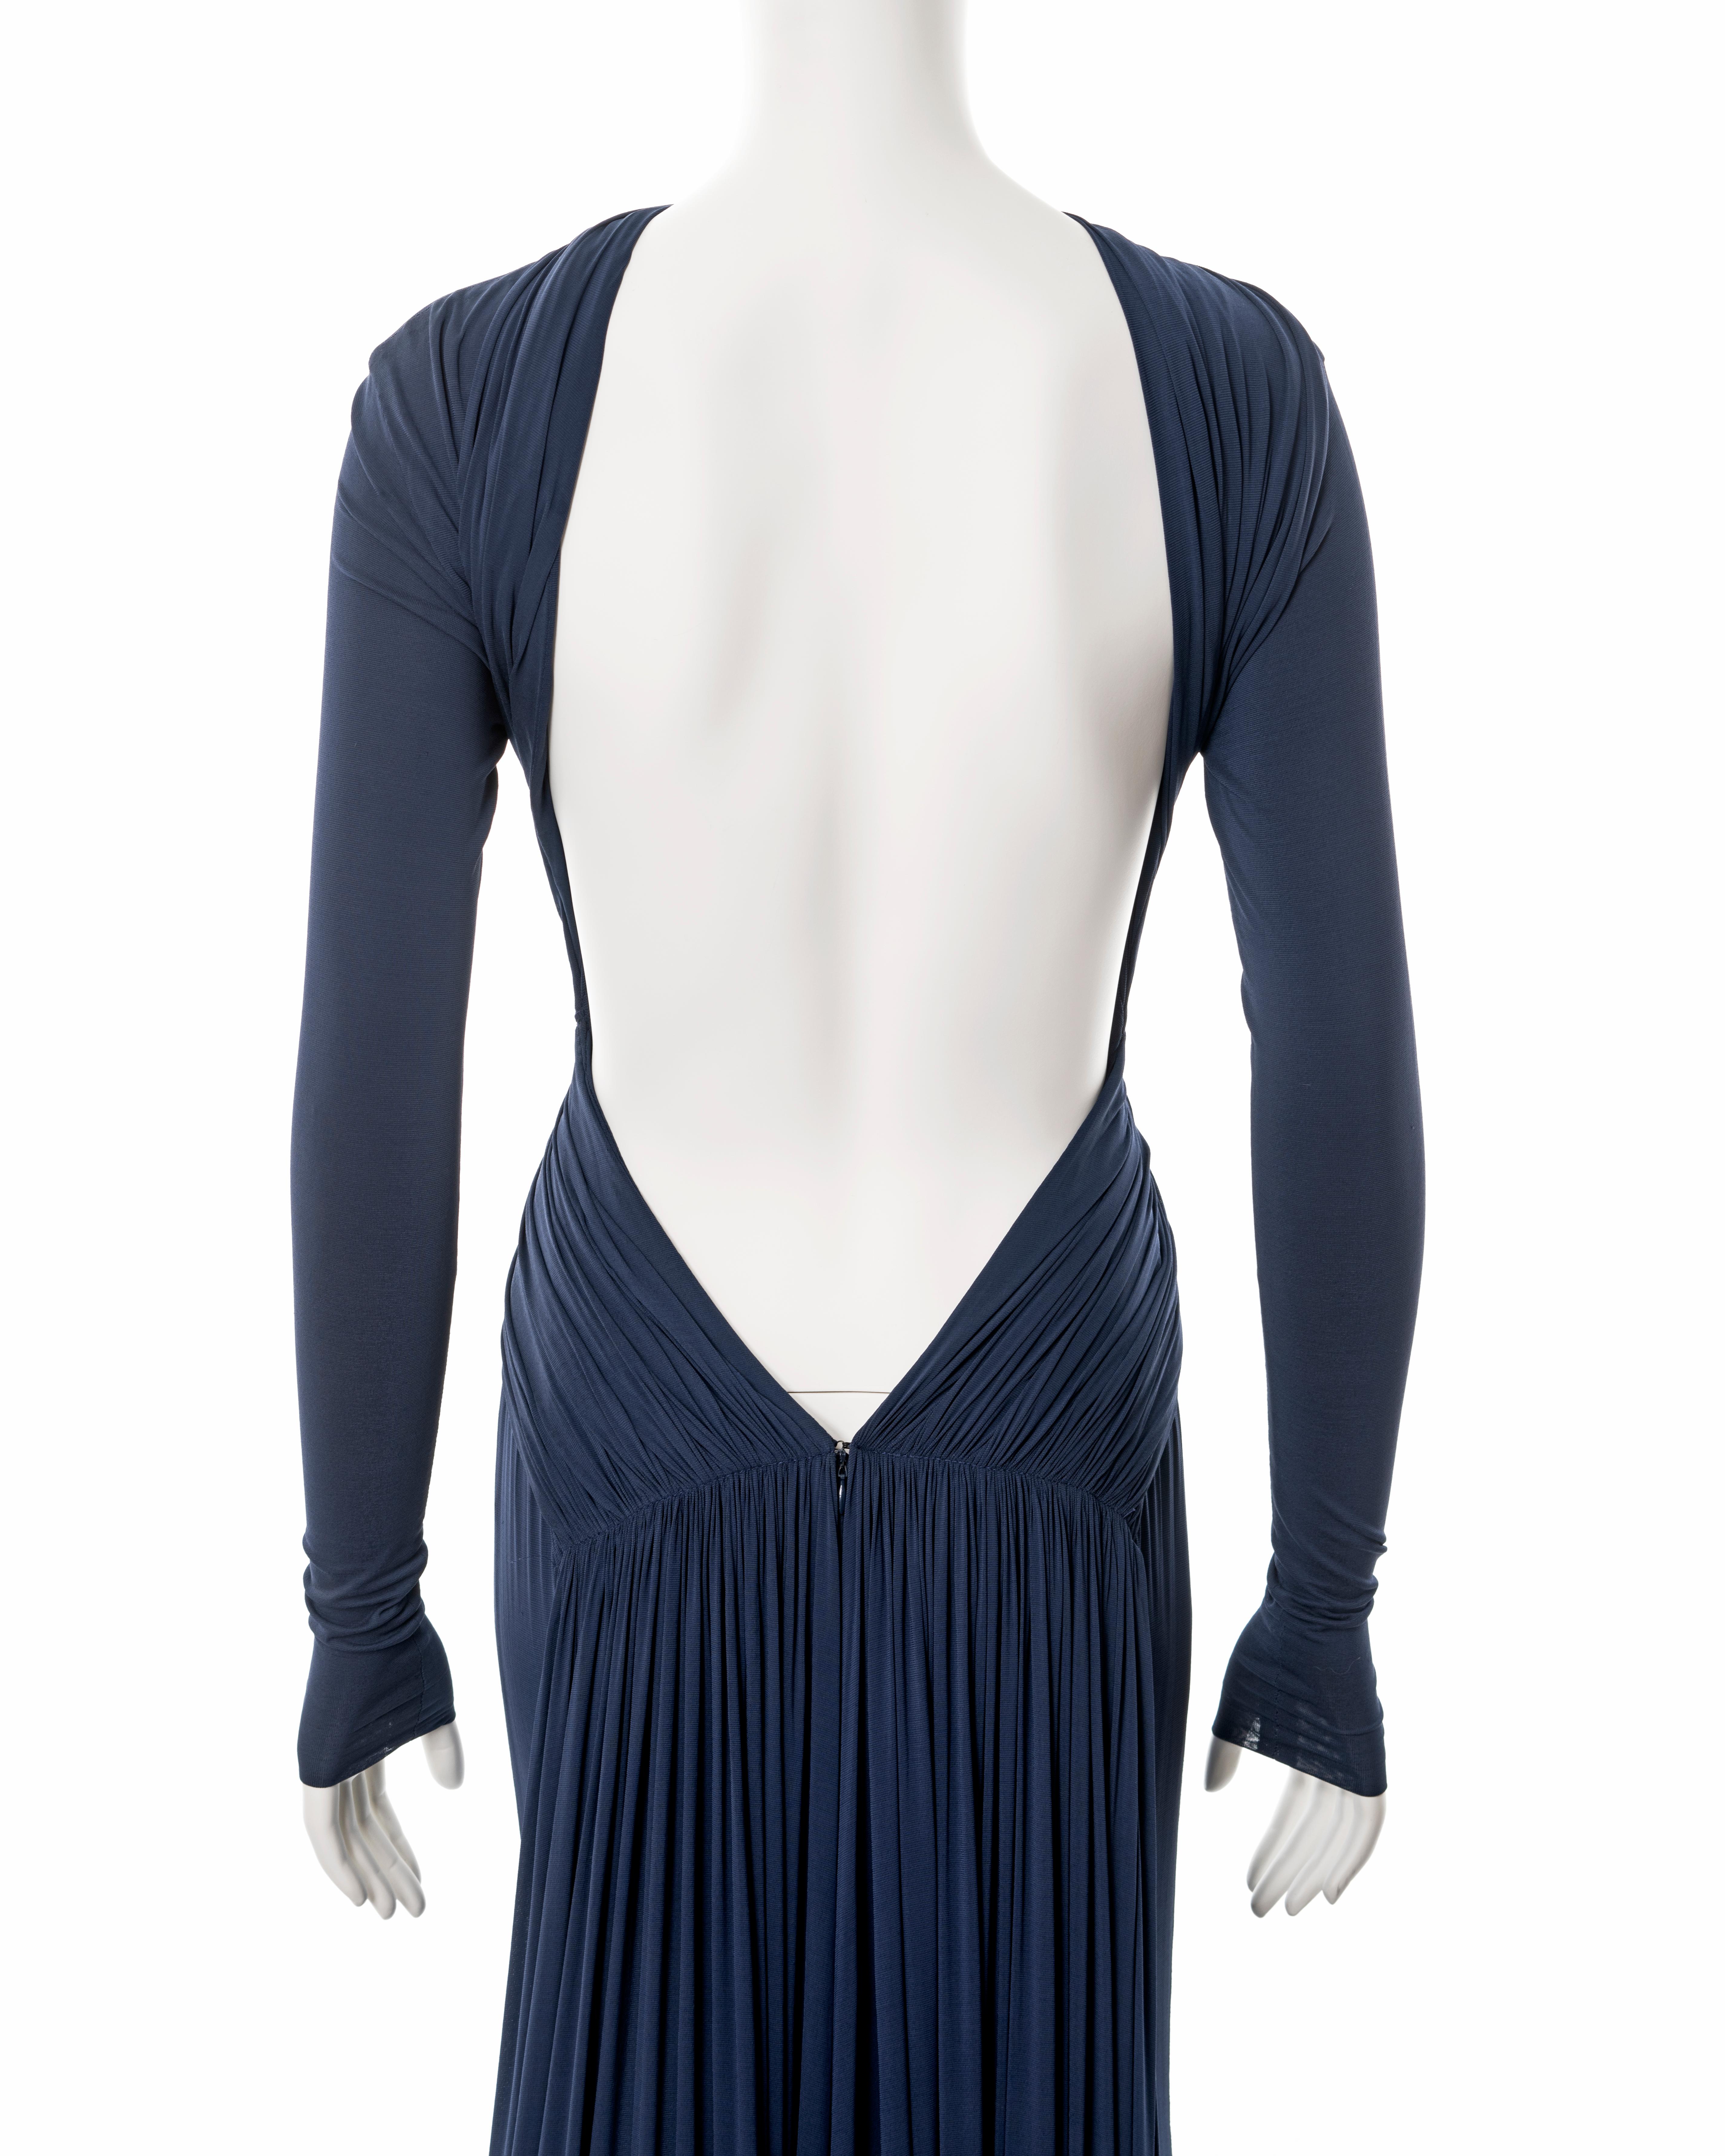 Guy Laroche navy blue Oscar dress, ss 2005 For Sale 1